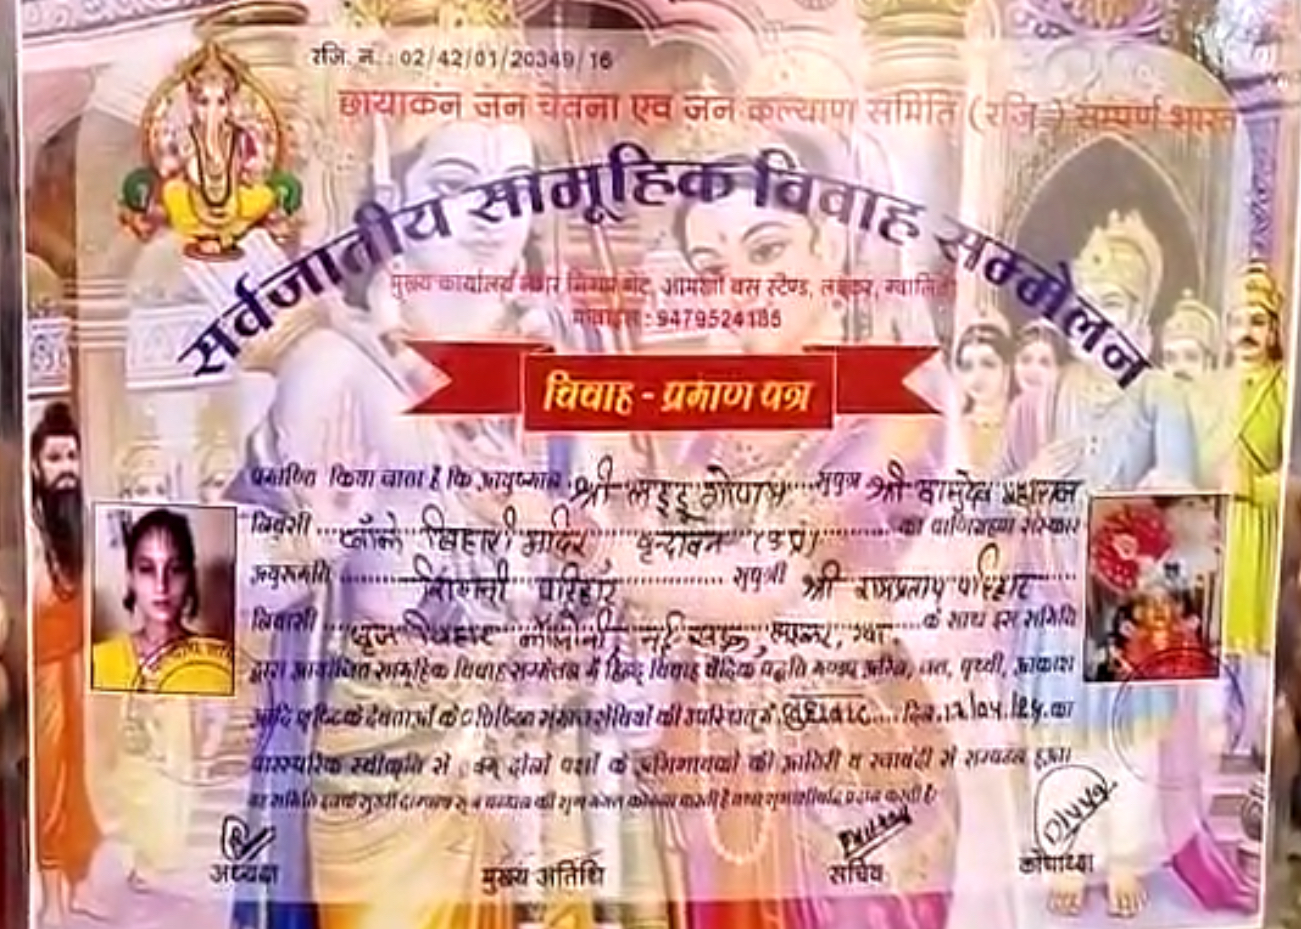 Gwalior Devotee married LordKrishna